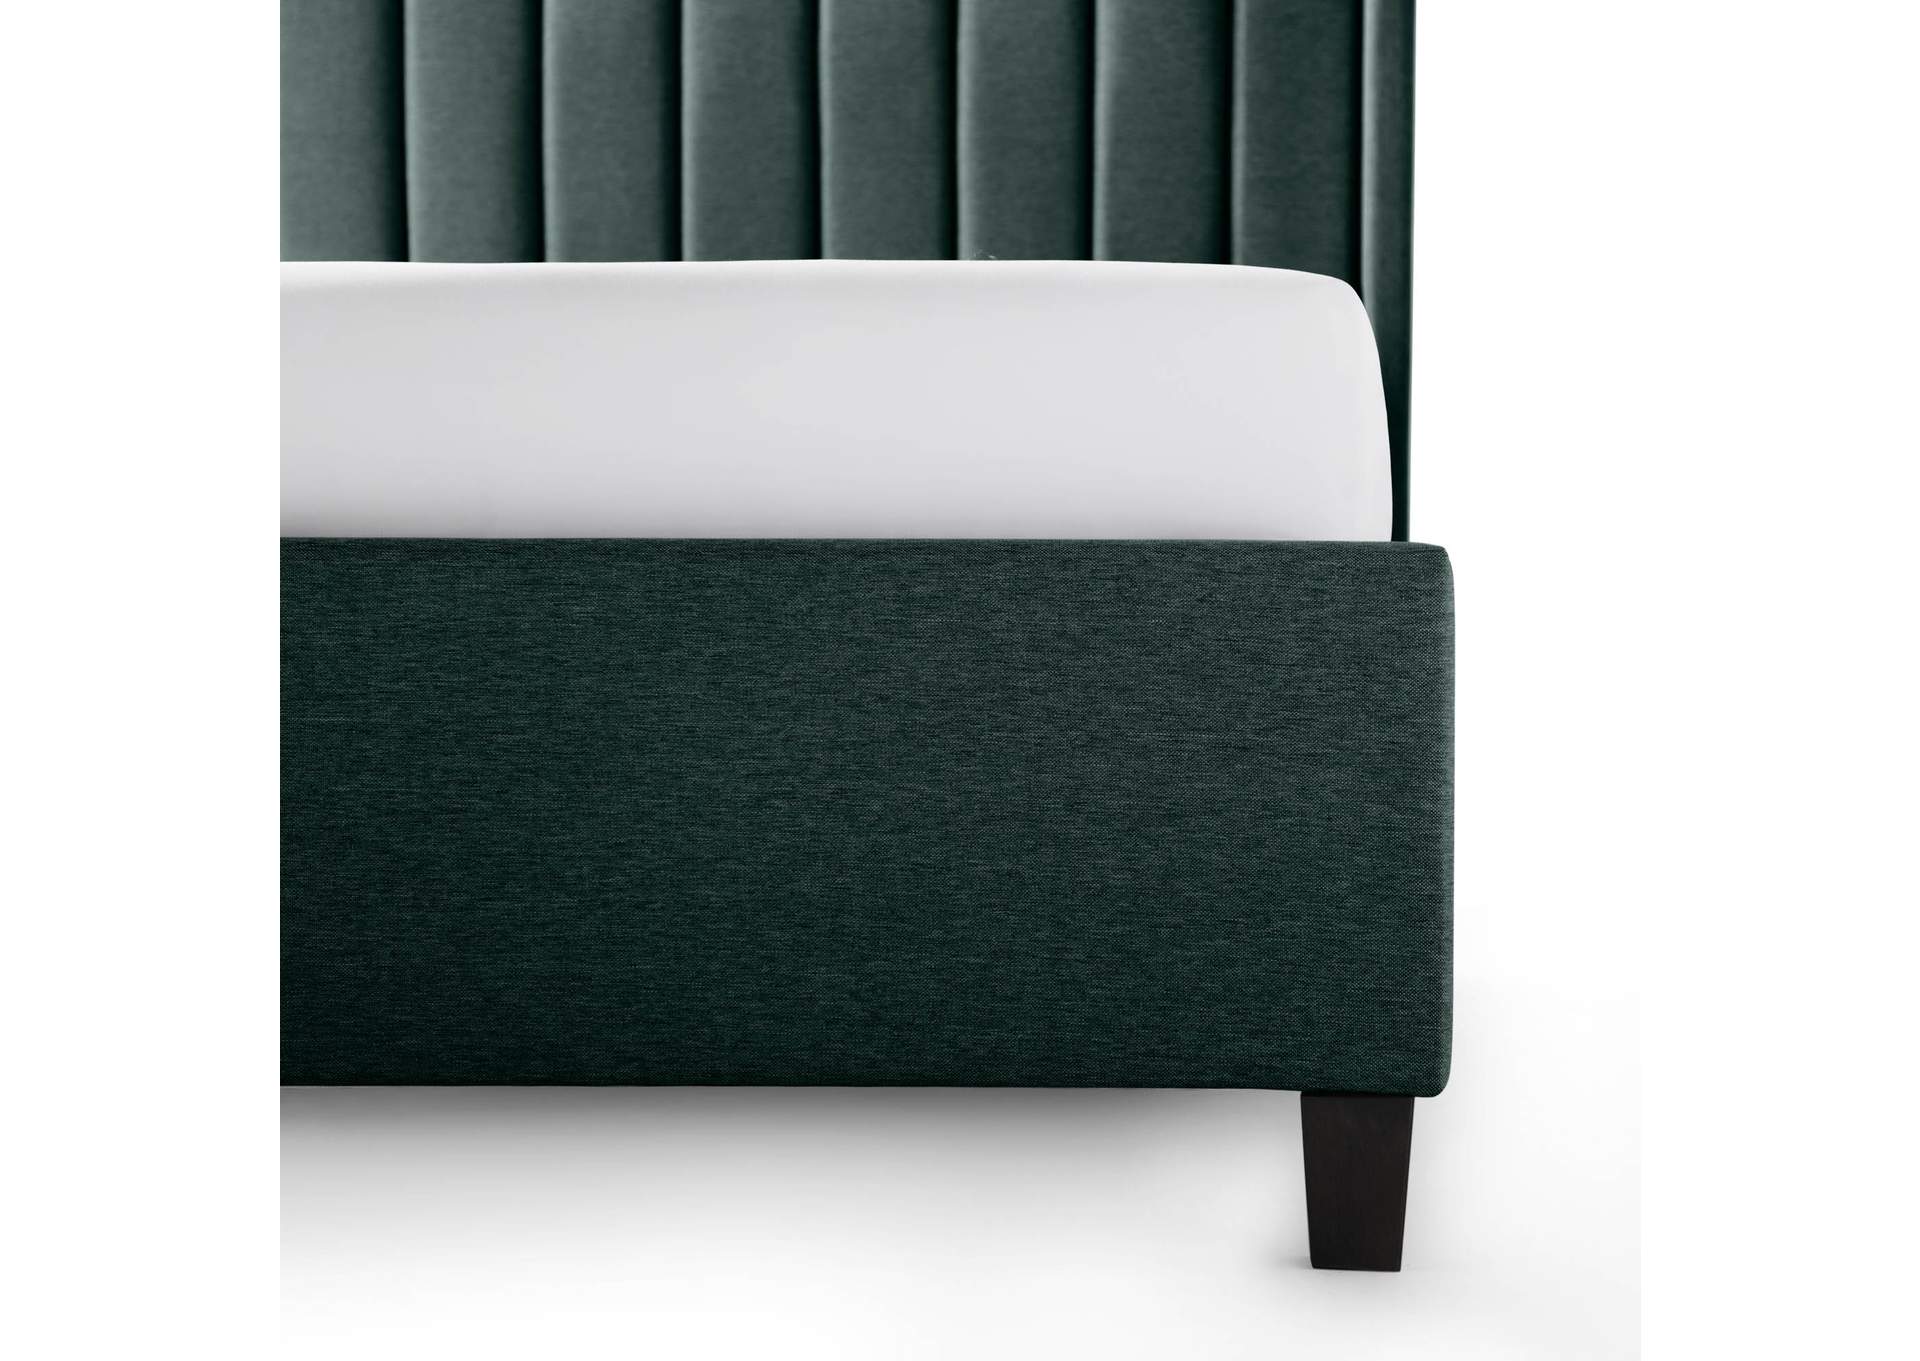 Malouf Charcoal Blackwell Upholstered Bed w/ Wingback Headboard - Full Size,Malouf